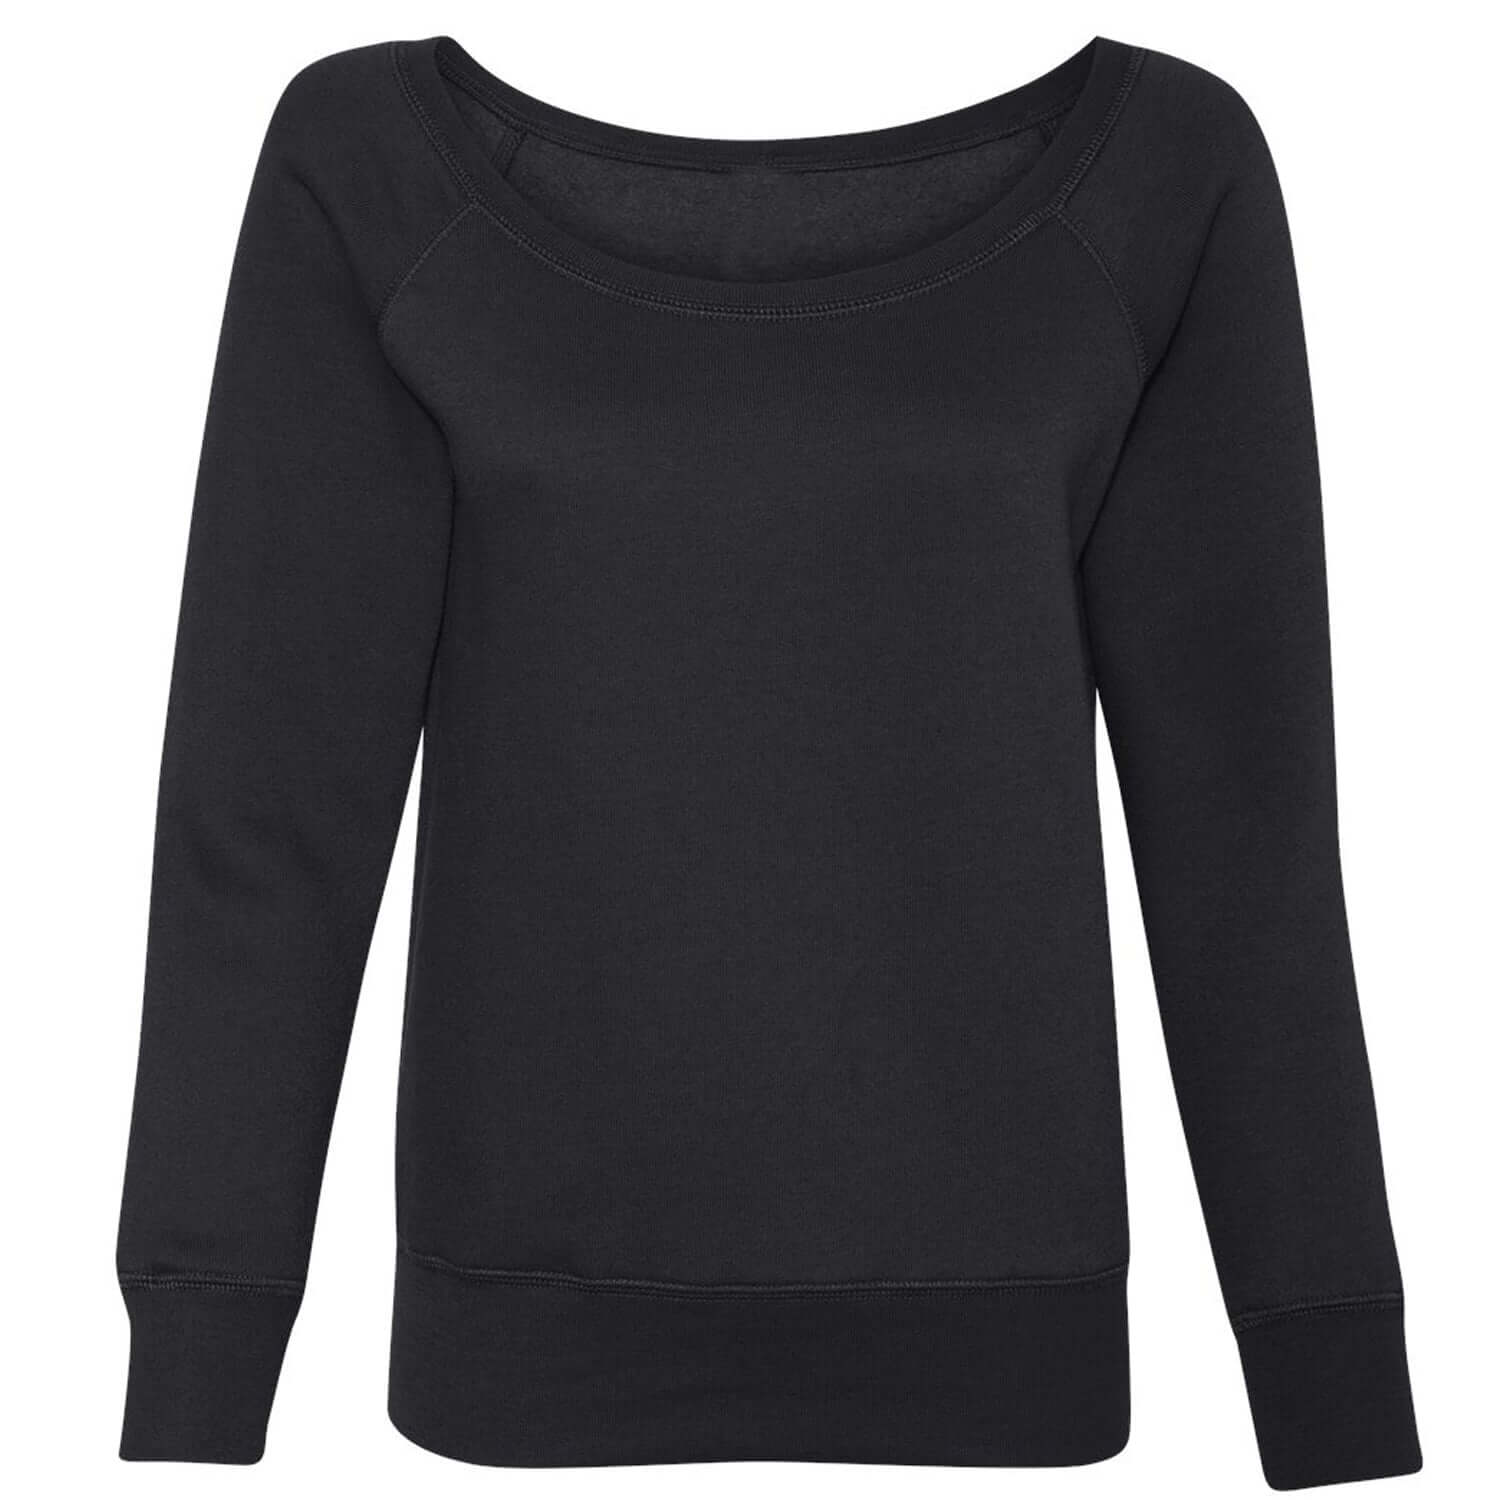 Basics - Plain Blank Slouchy Off Shoulder Oversized Sweatshirt blank, clothing, plain, tshirts by Expression Tees